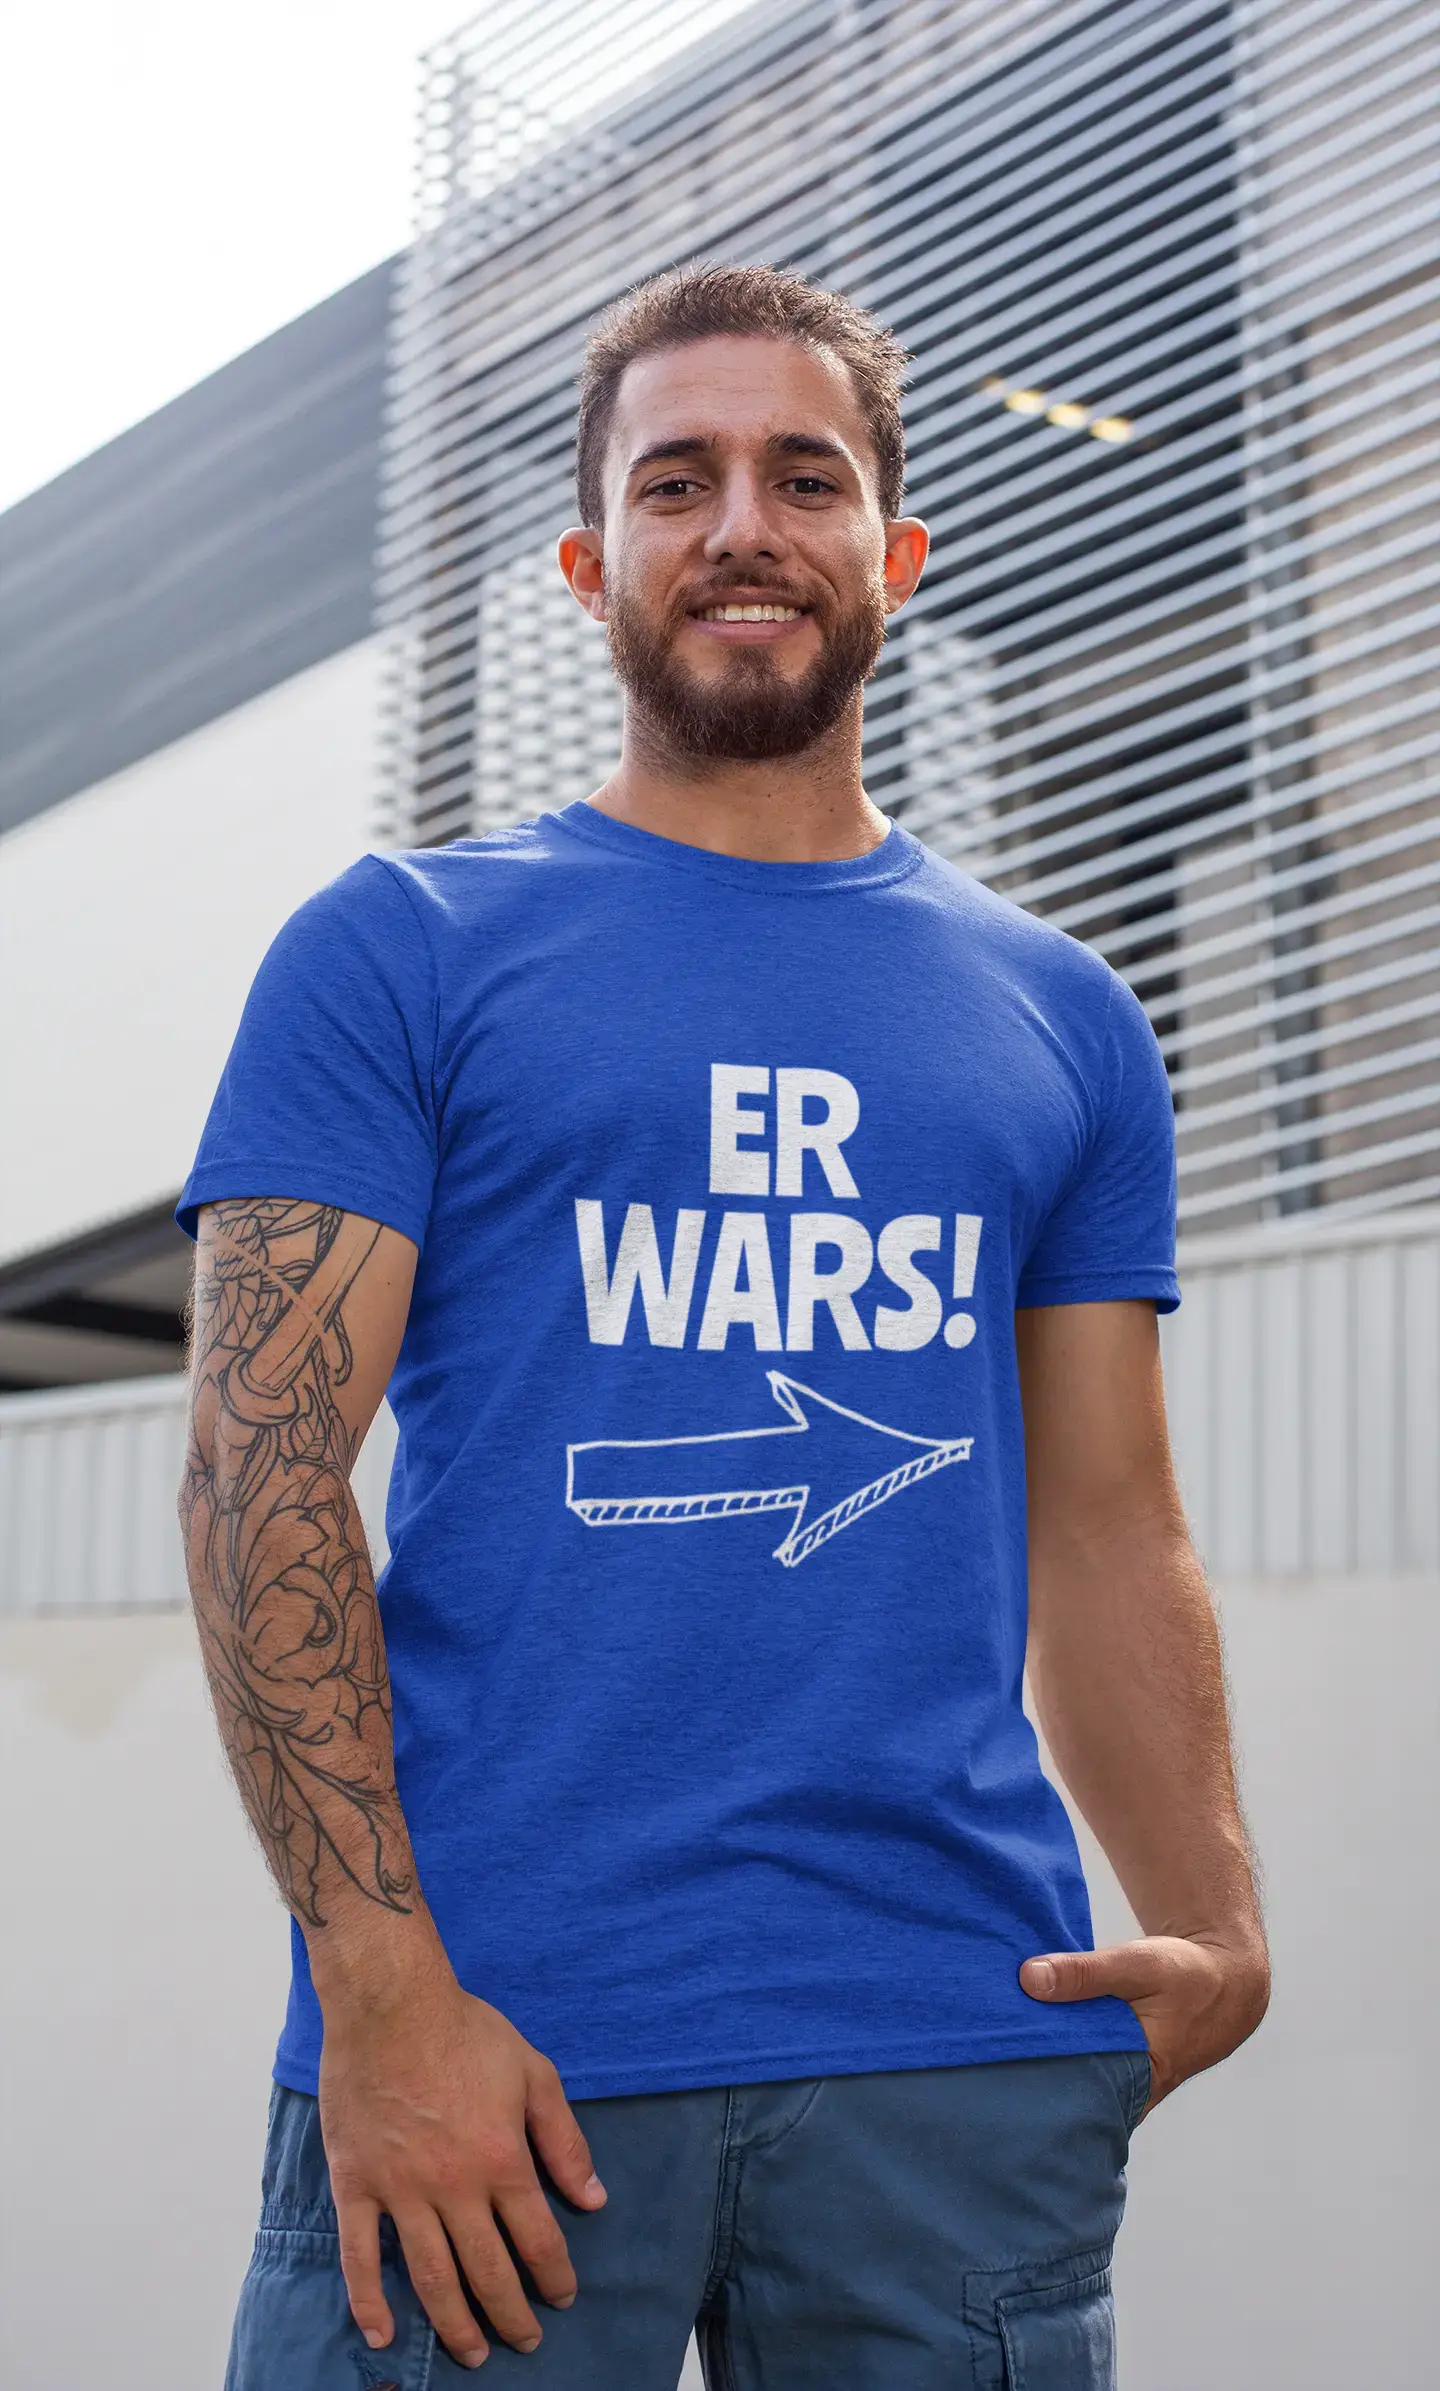 Men’s Graphic T-Shirt Er Wars Gift Idea